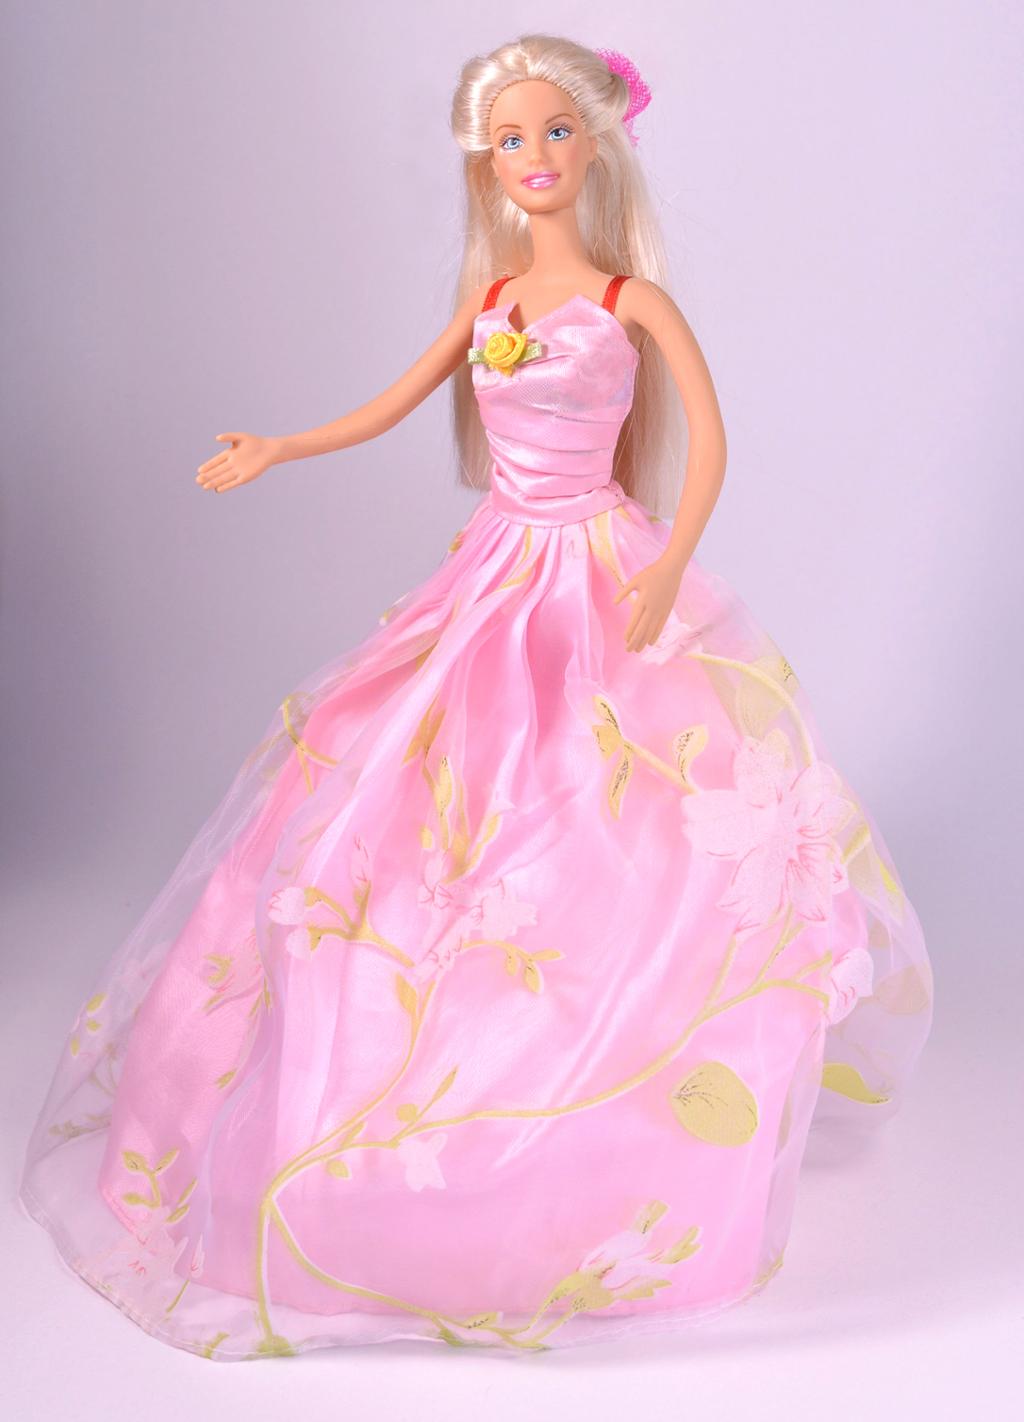 Barbie-dokke i rosa kjole. Foto. 